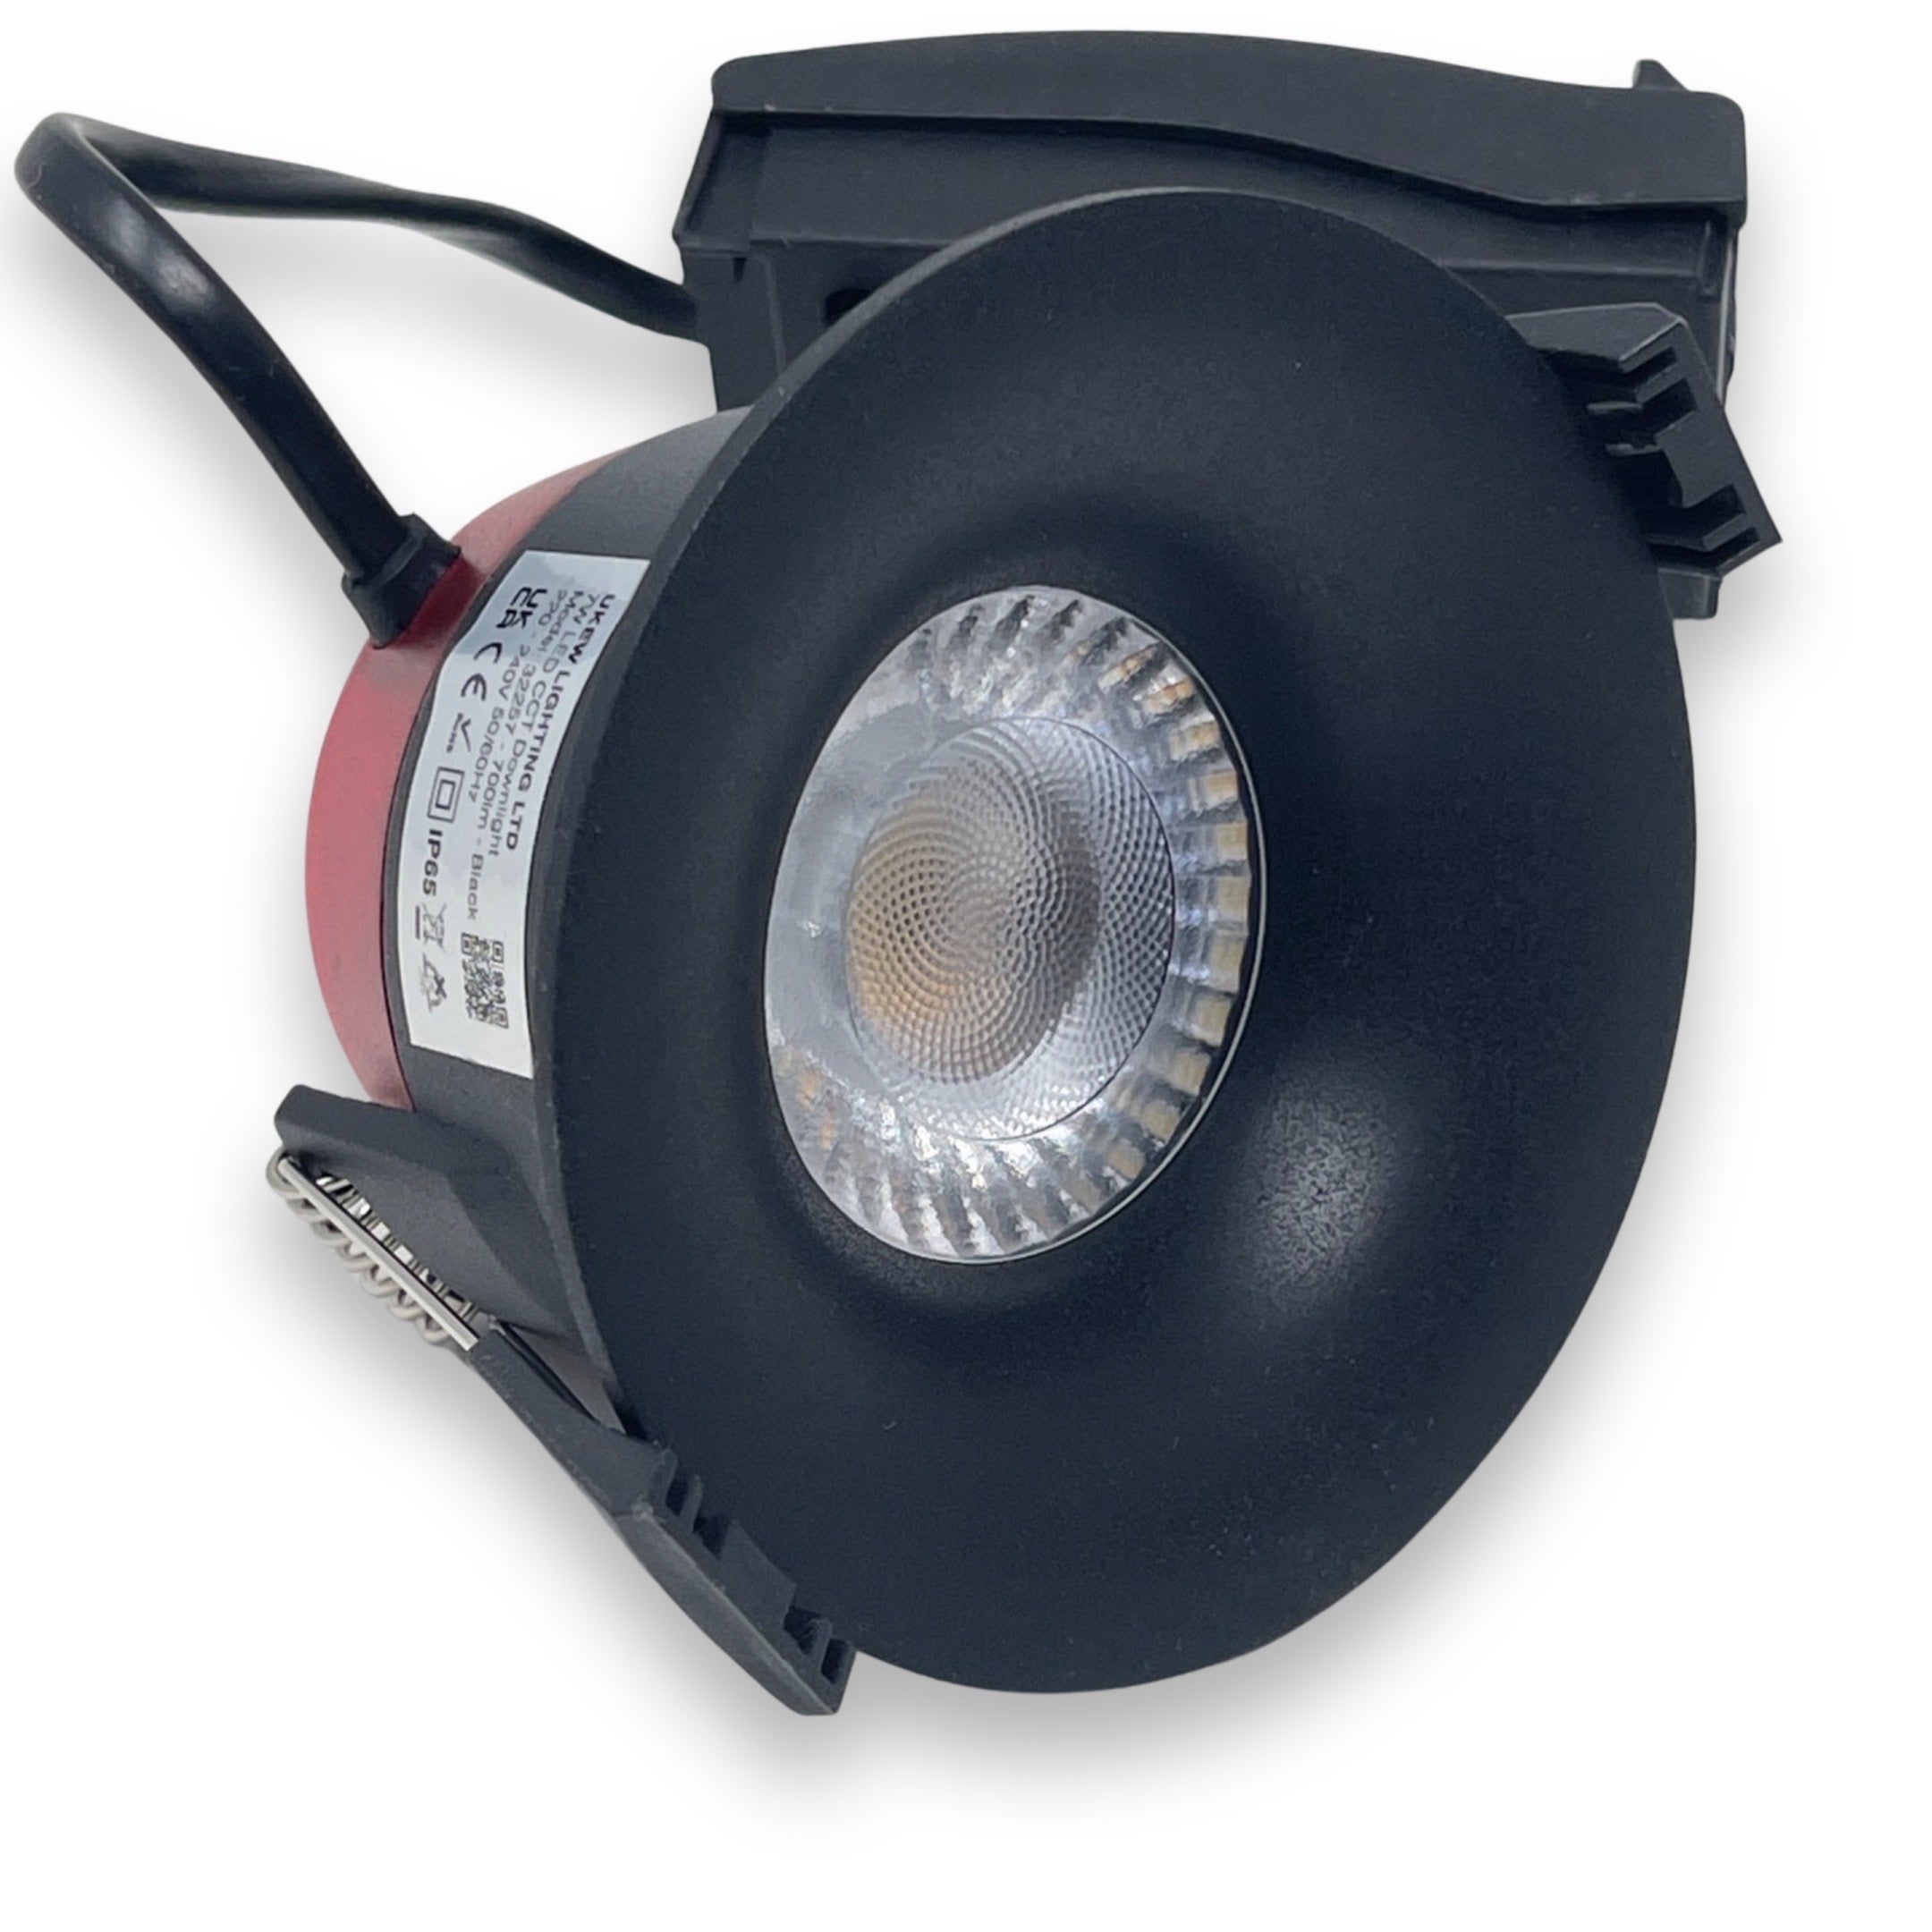 LED DownLight 7w Spotlight Waterproof IP65 Black Dimmable CCT - Light fixtures UK